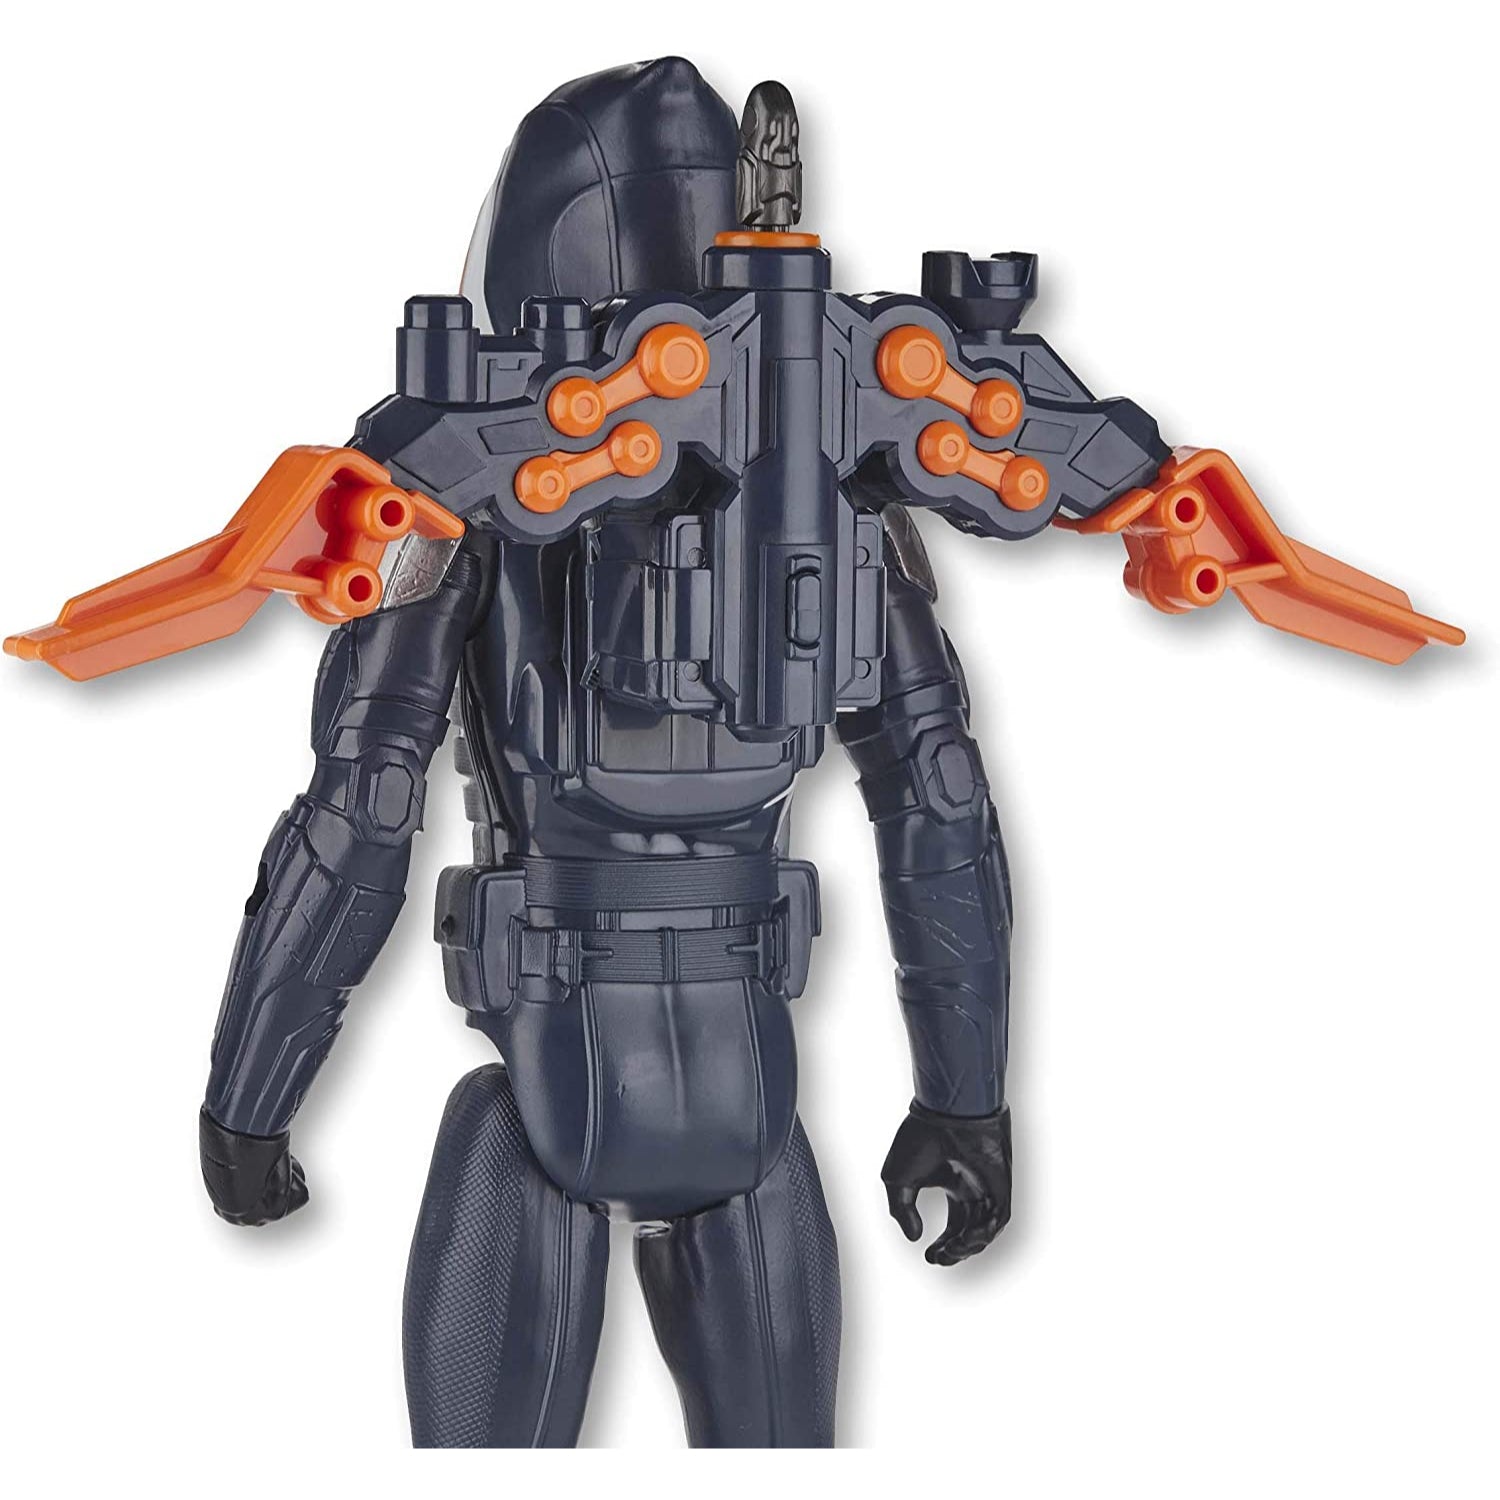 Hasbro Marvel Black Widow Titan Hero Series Blast Gear Taskmaster Action Figure, 12-Inch Toy